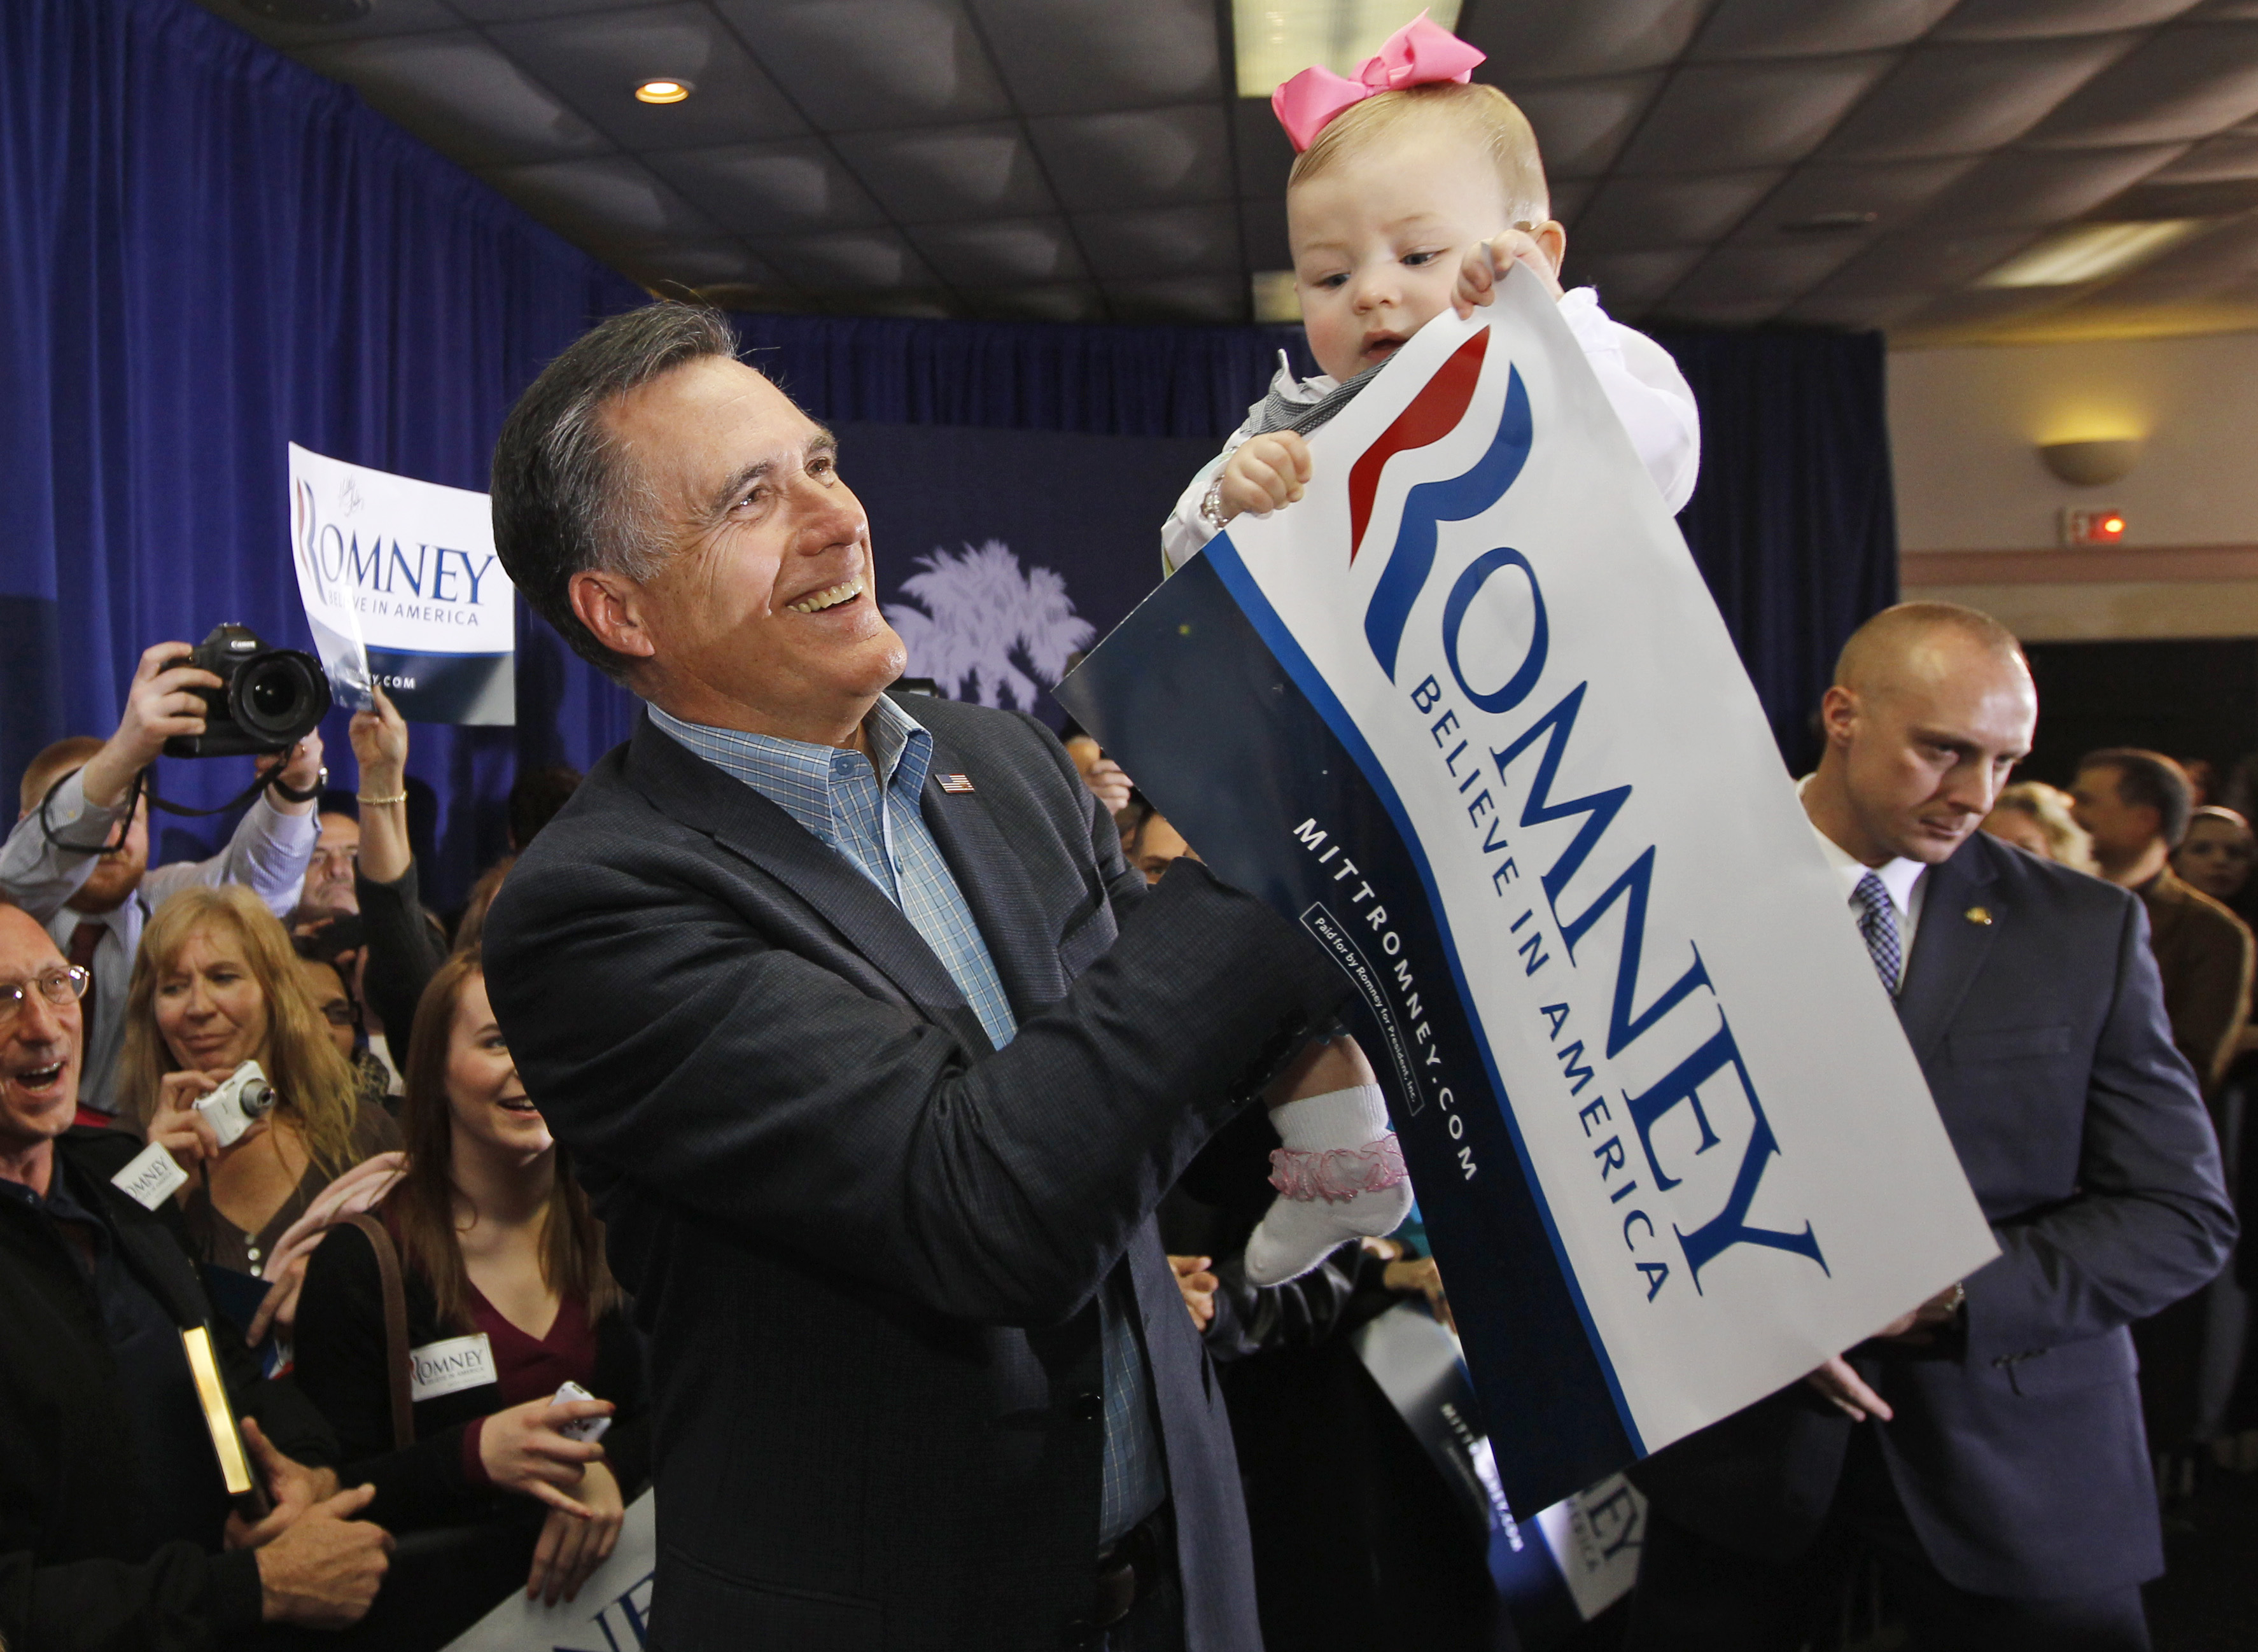 Presidentvalet, USA, Republikanerna, Mitt Romney